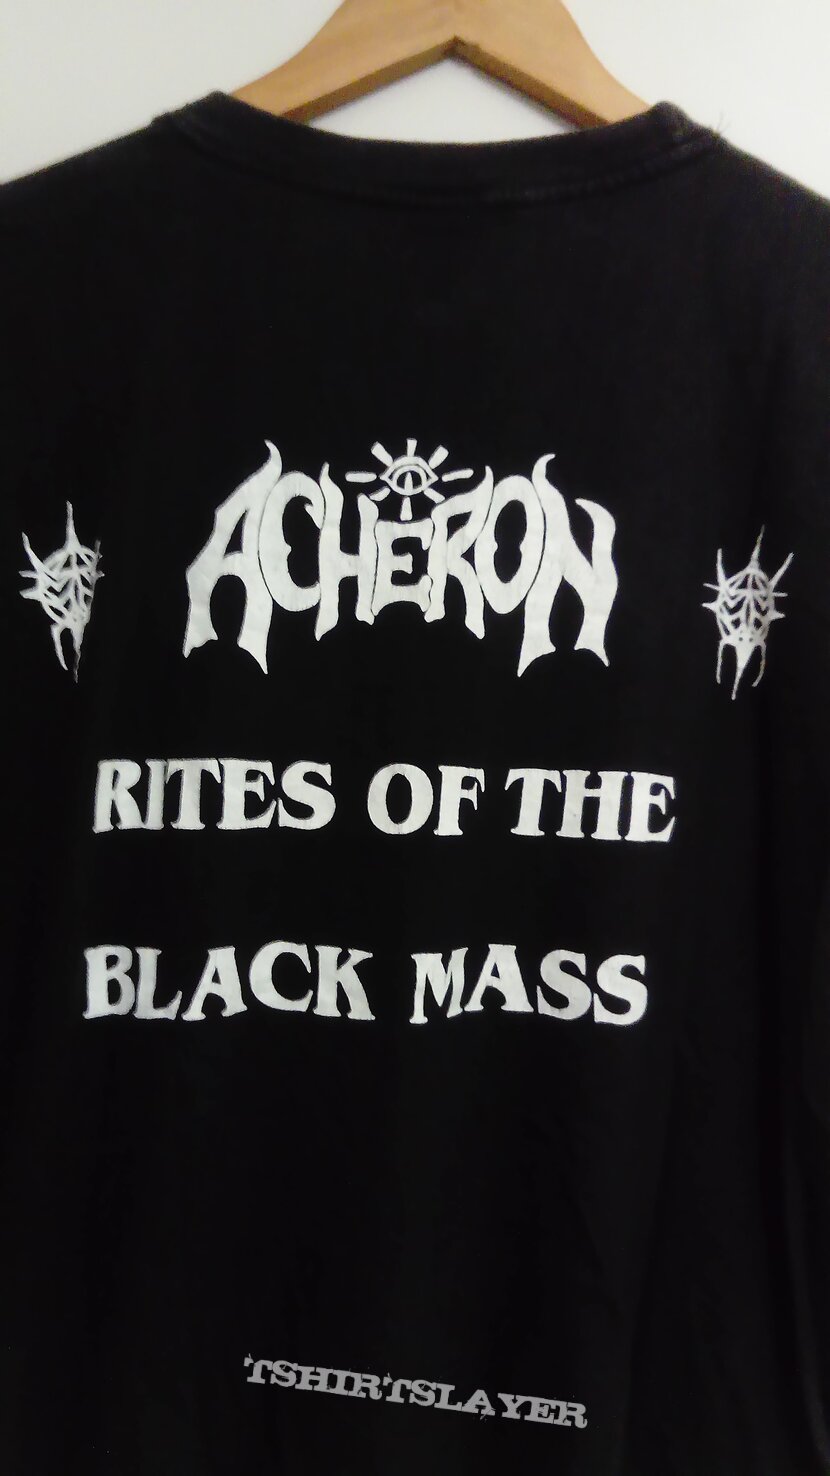 Acheron - Rites Of The Black Mass 1992